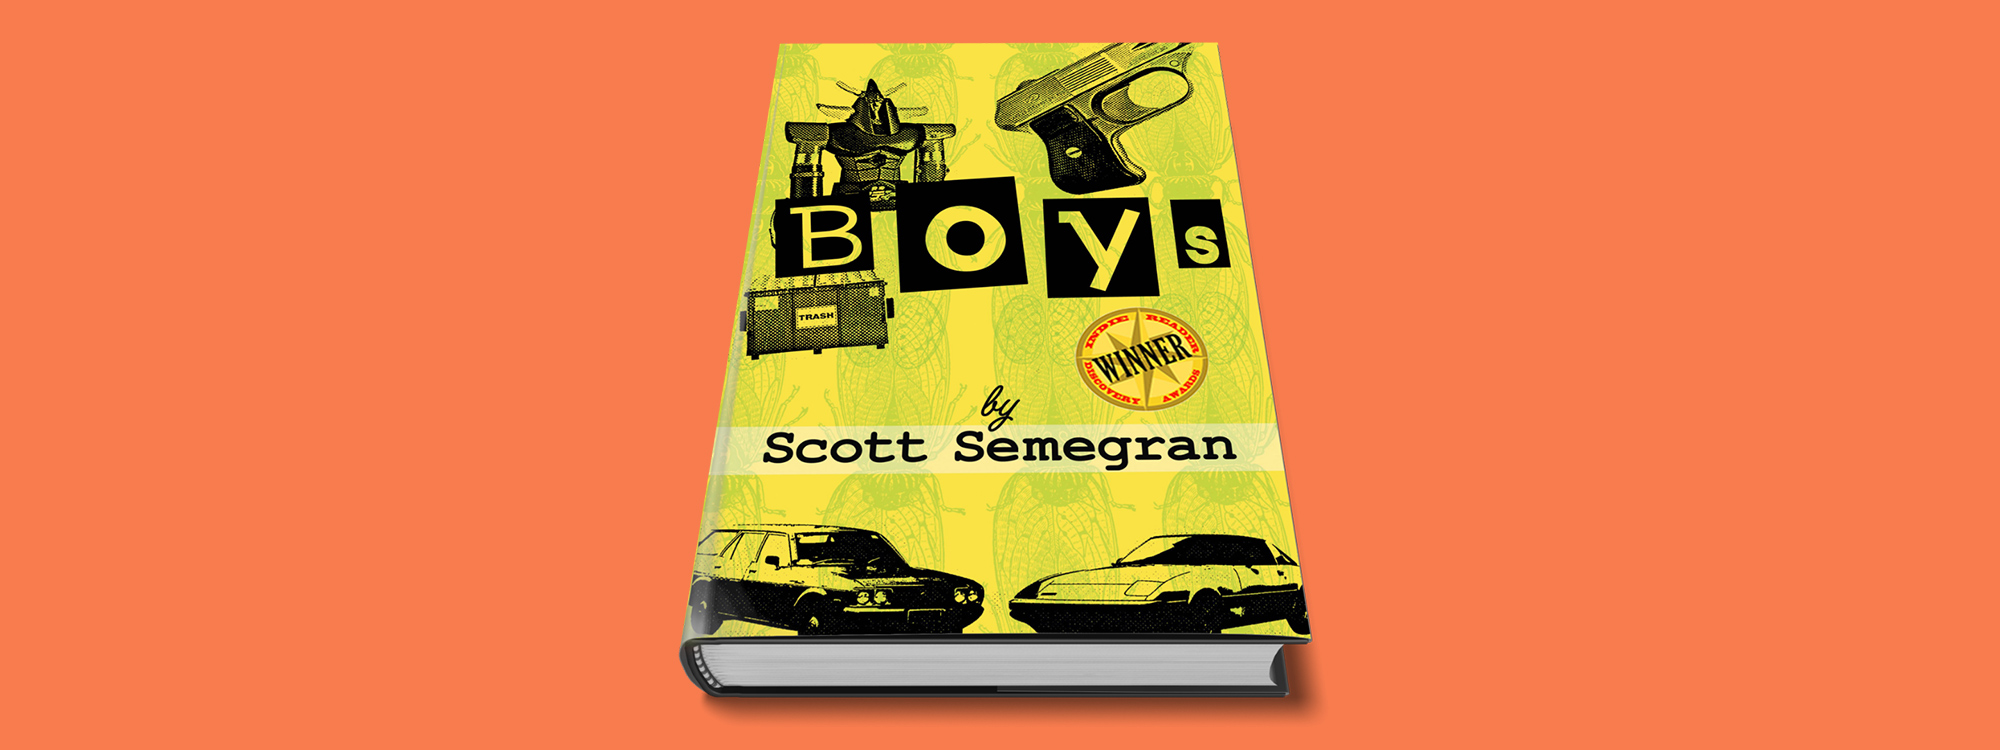 Boys by Scott Semegran